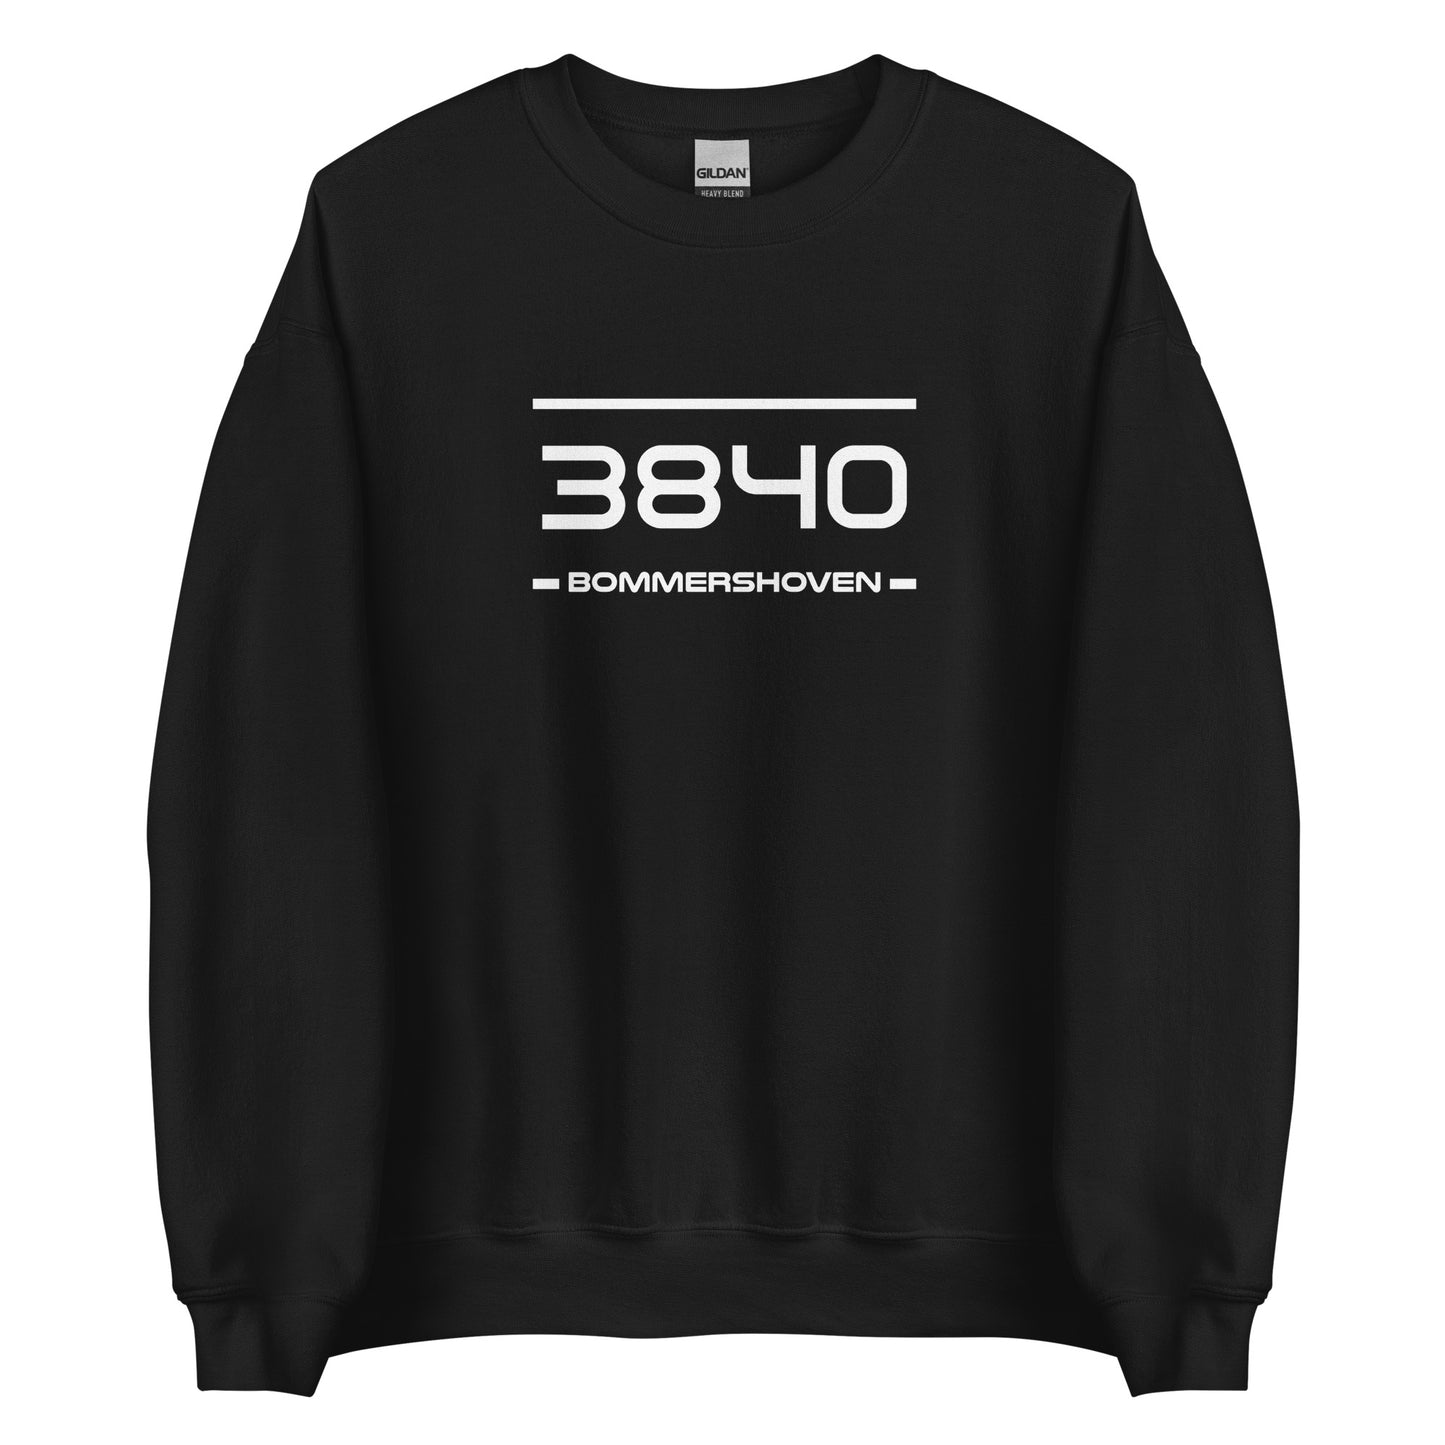 Sweater - 3840 - Bommershoven (M/V)